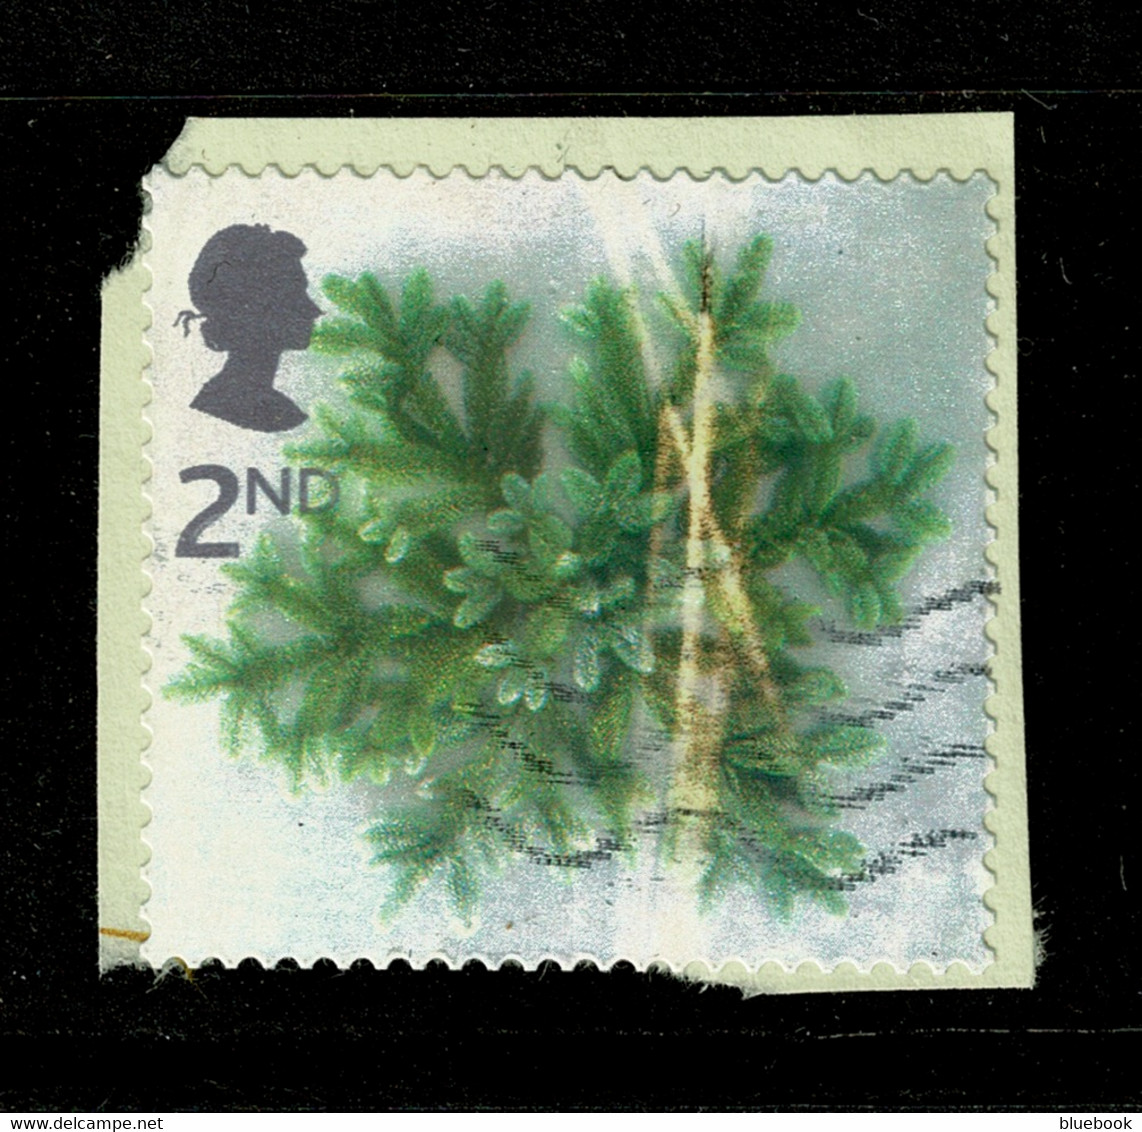 Ref 1485 - GB - 2nd Class 2002 Christmas Xmas Stamp - Major Printing Flaw Error - Errors, Freaks & Oddities (EFOs